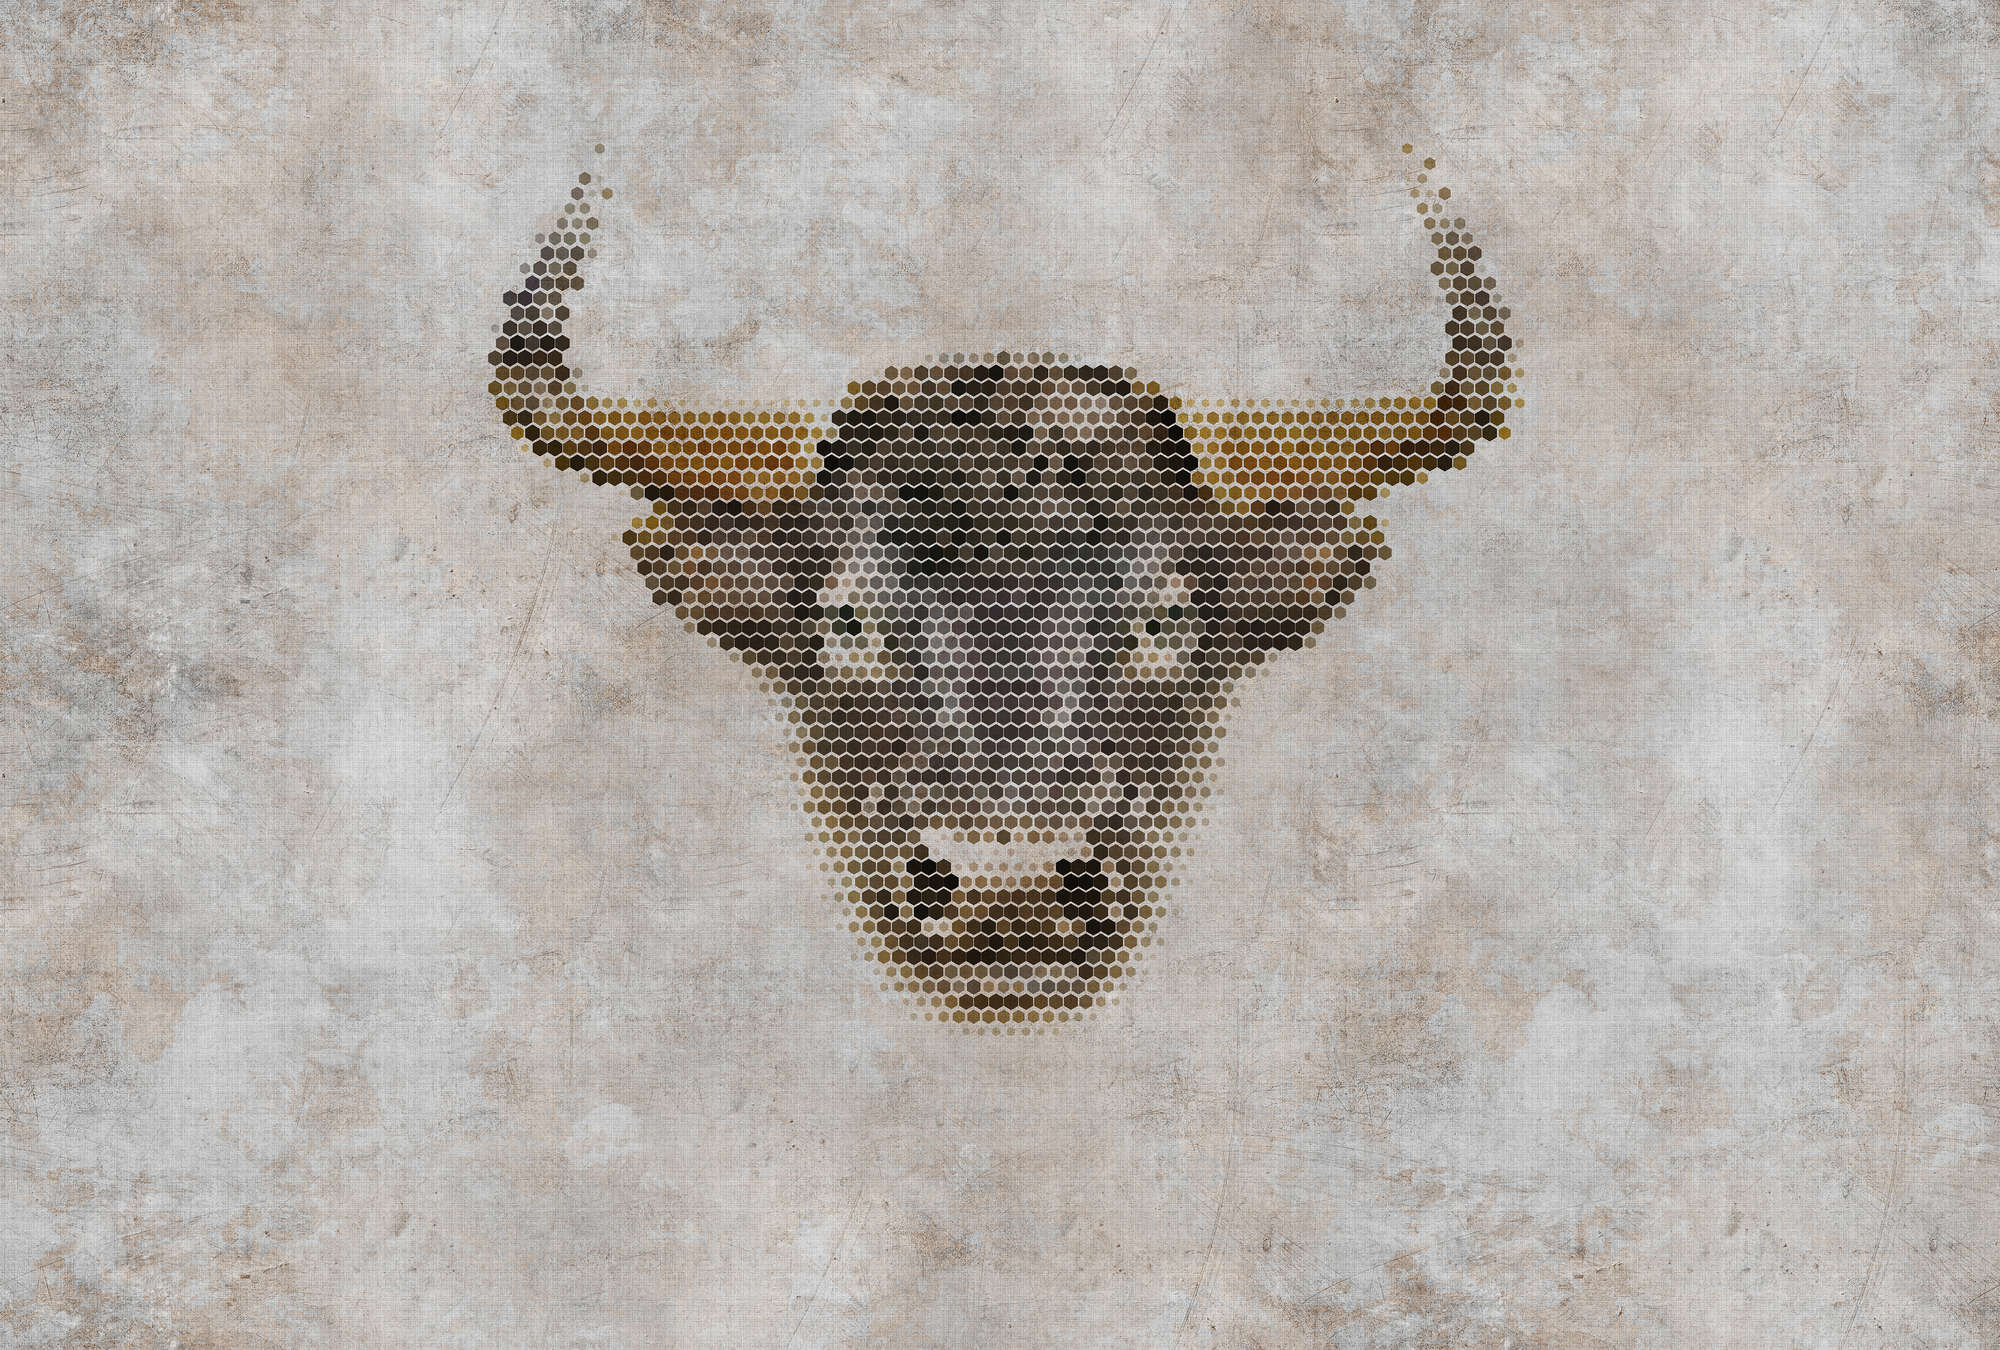             Big three 2 - papel pintado con impresión digital, estructura de lino natural en aspecto concreto con búfalo - beige, marrón | vellón liso mate
        